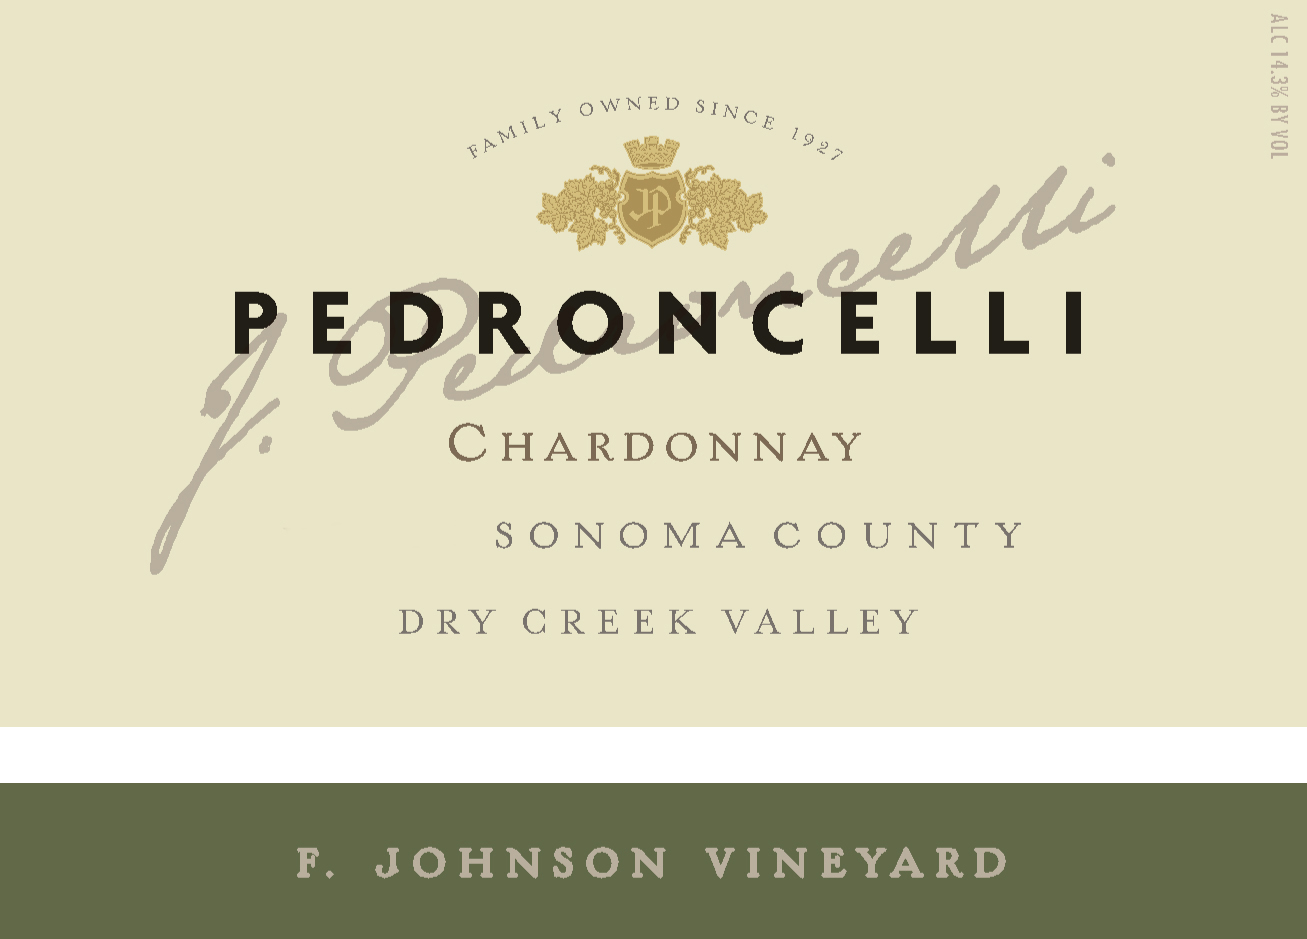 Pedroncelli - Chardonnay - F Johnson Vineyard label